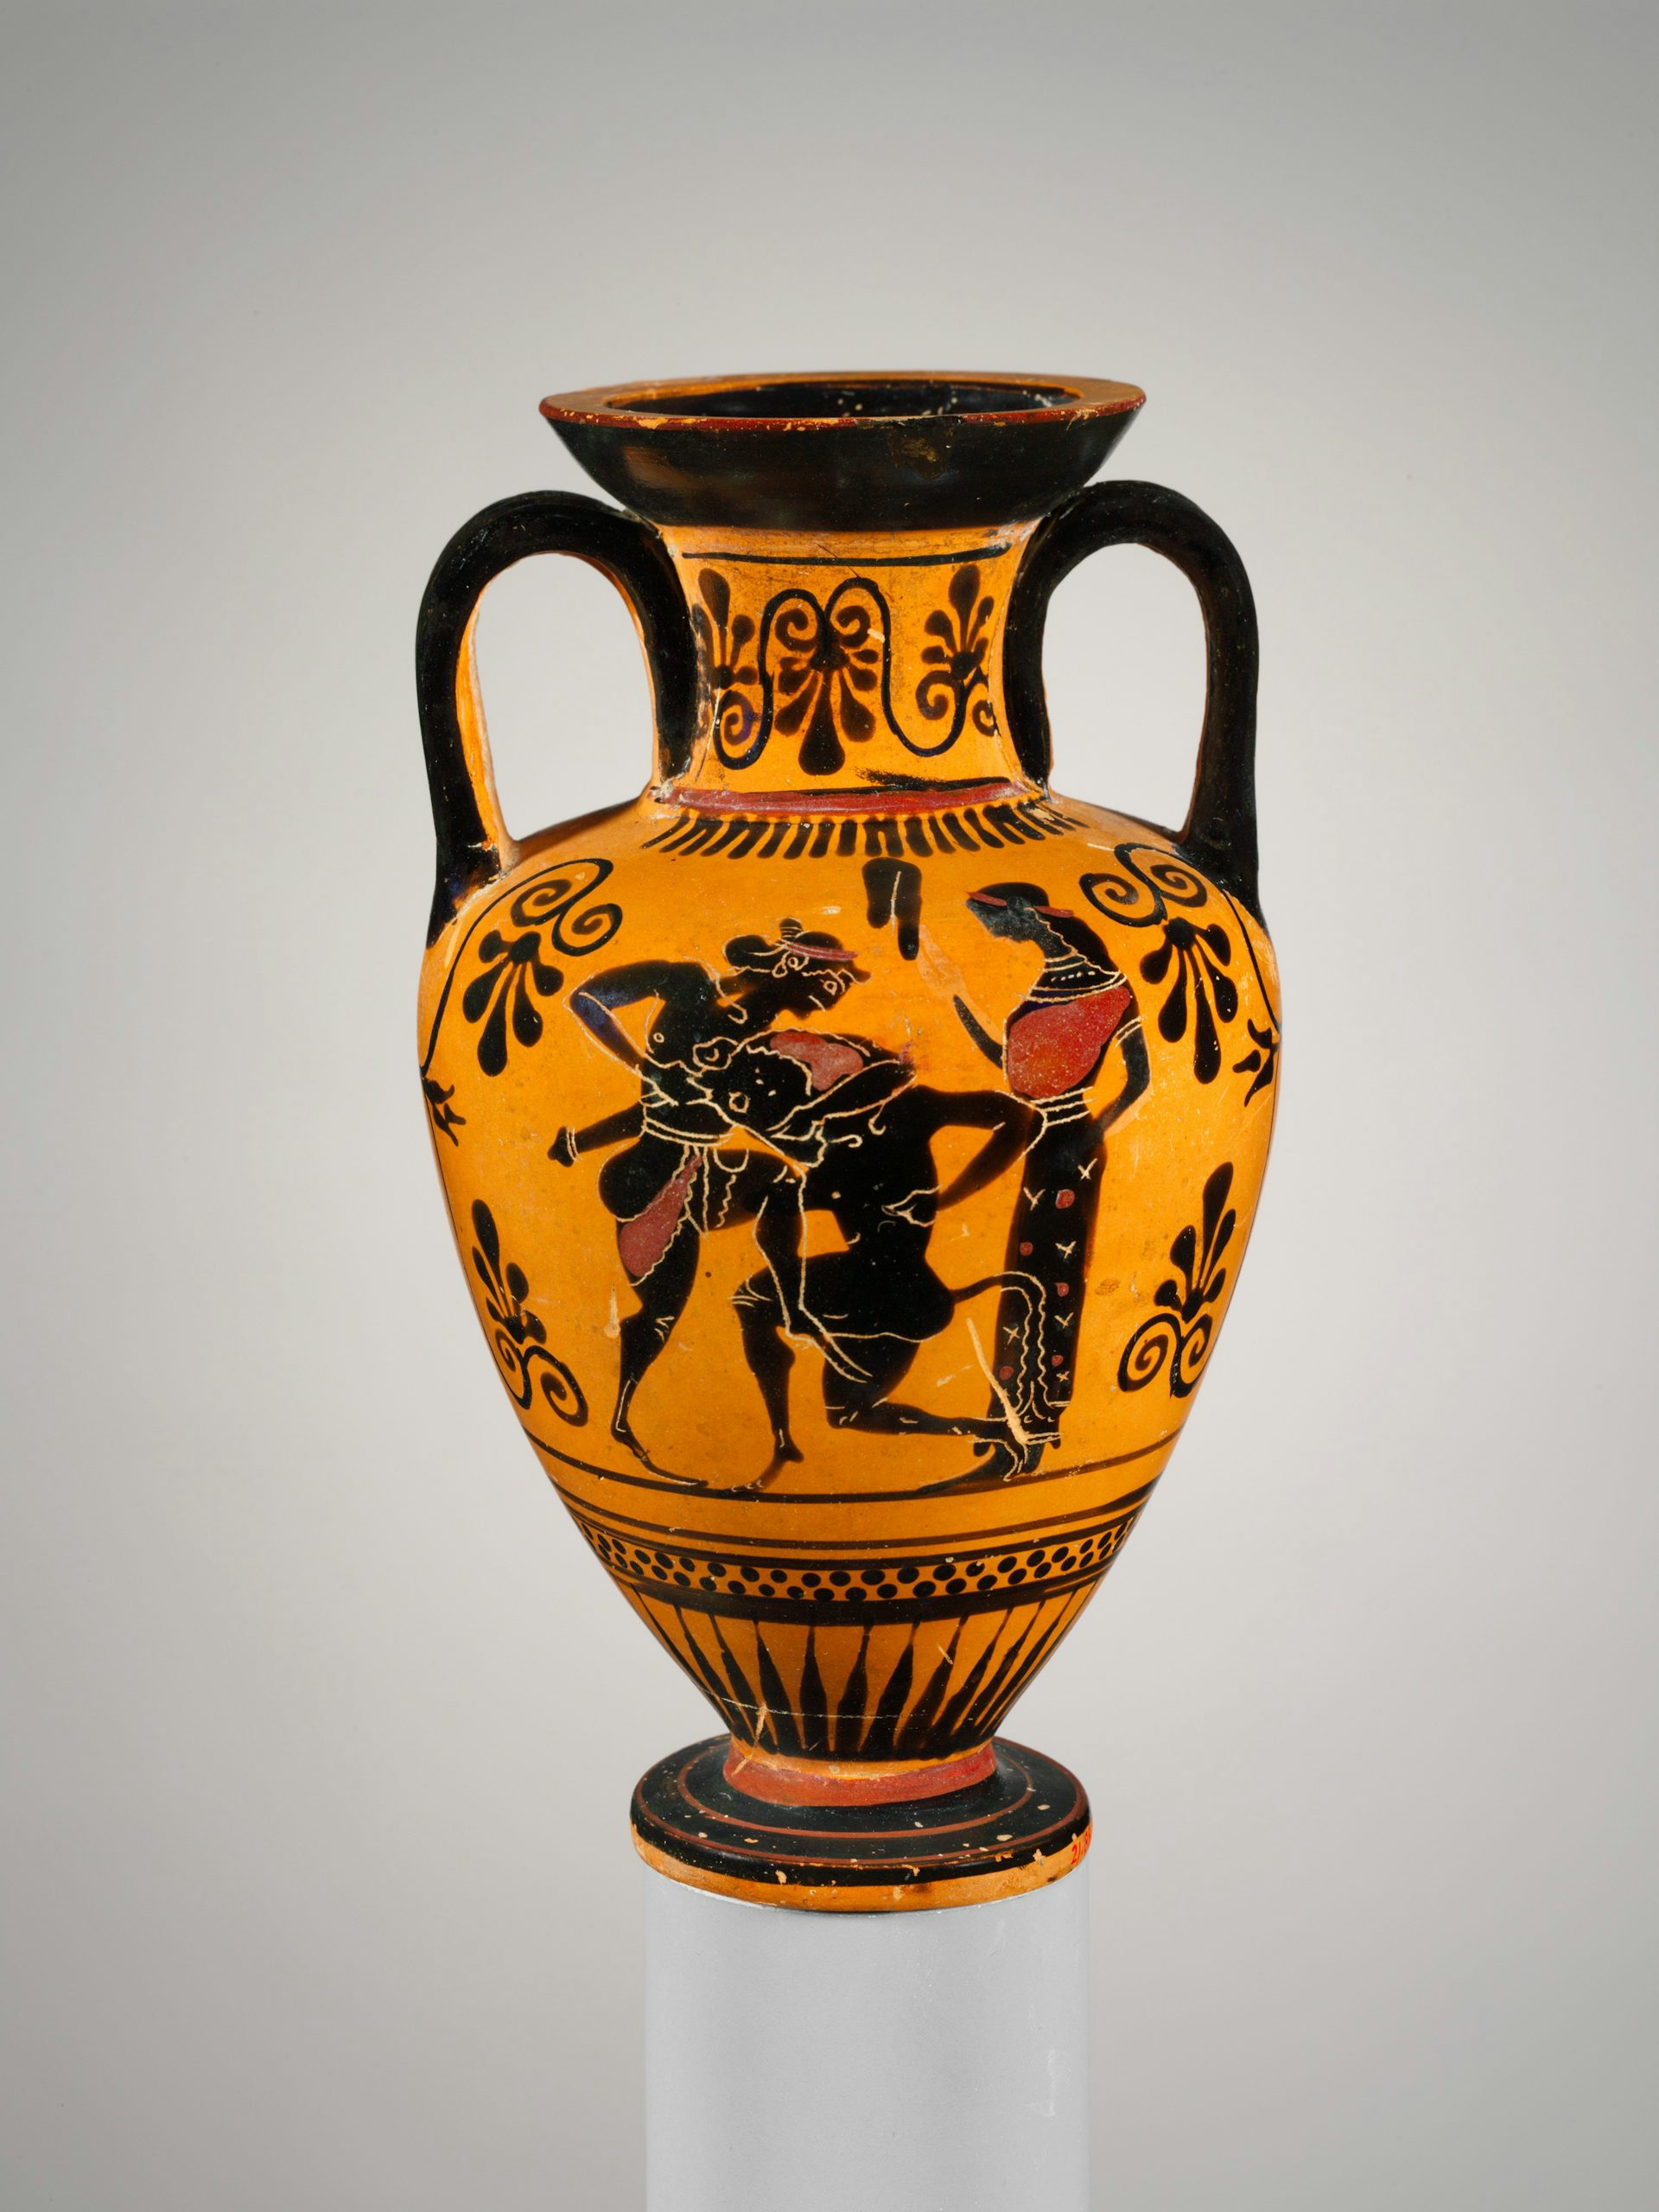 Vase painting of Theseus fighting the Minotaur